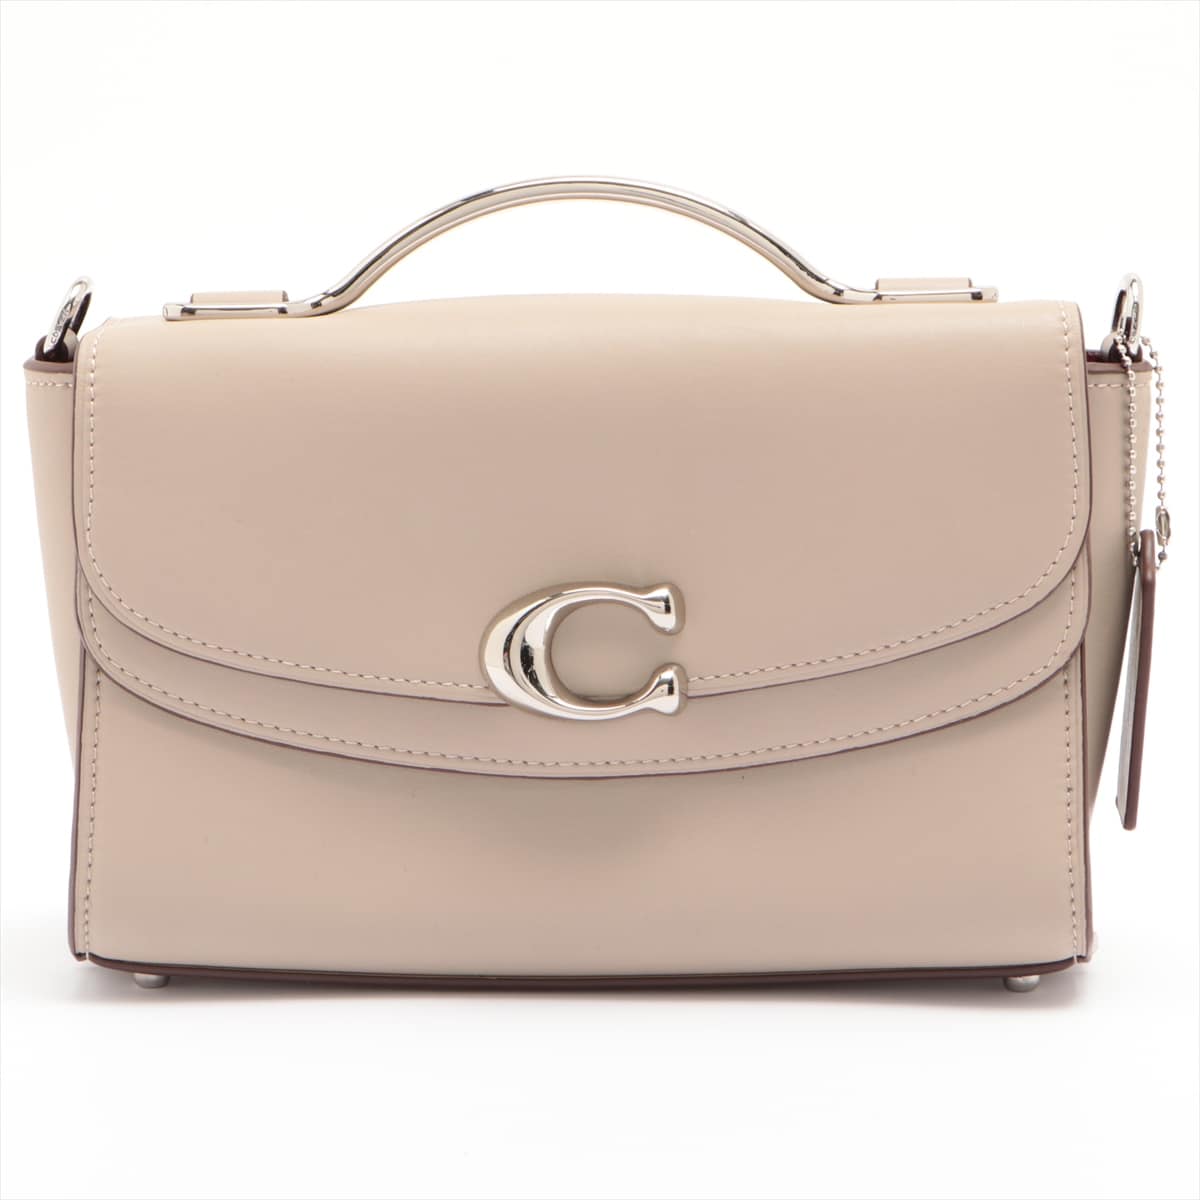 COACH Leather 2way handbag Beige C2187